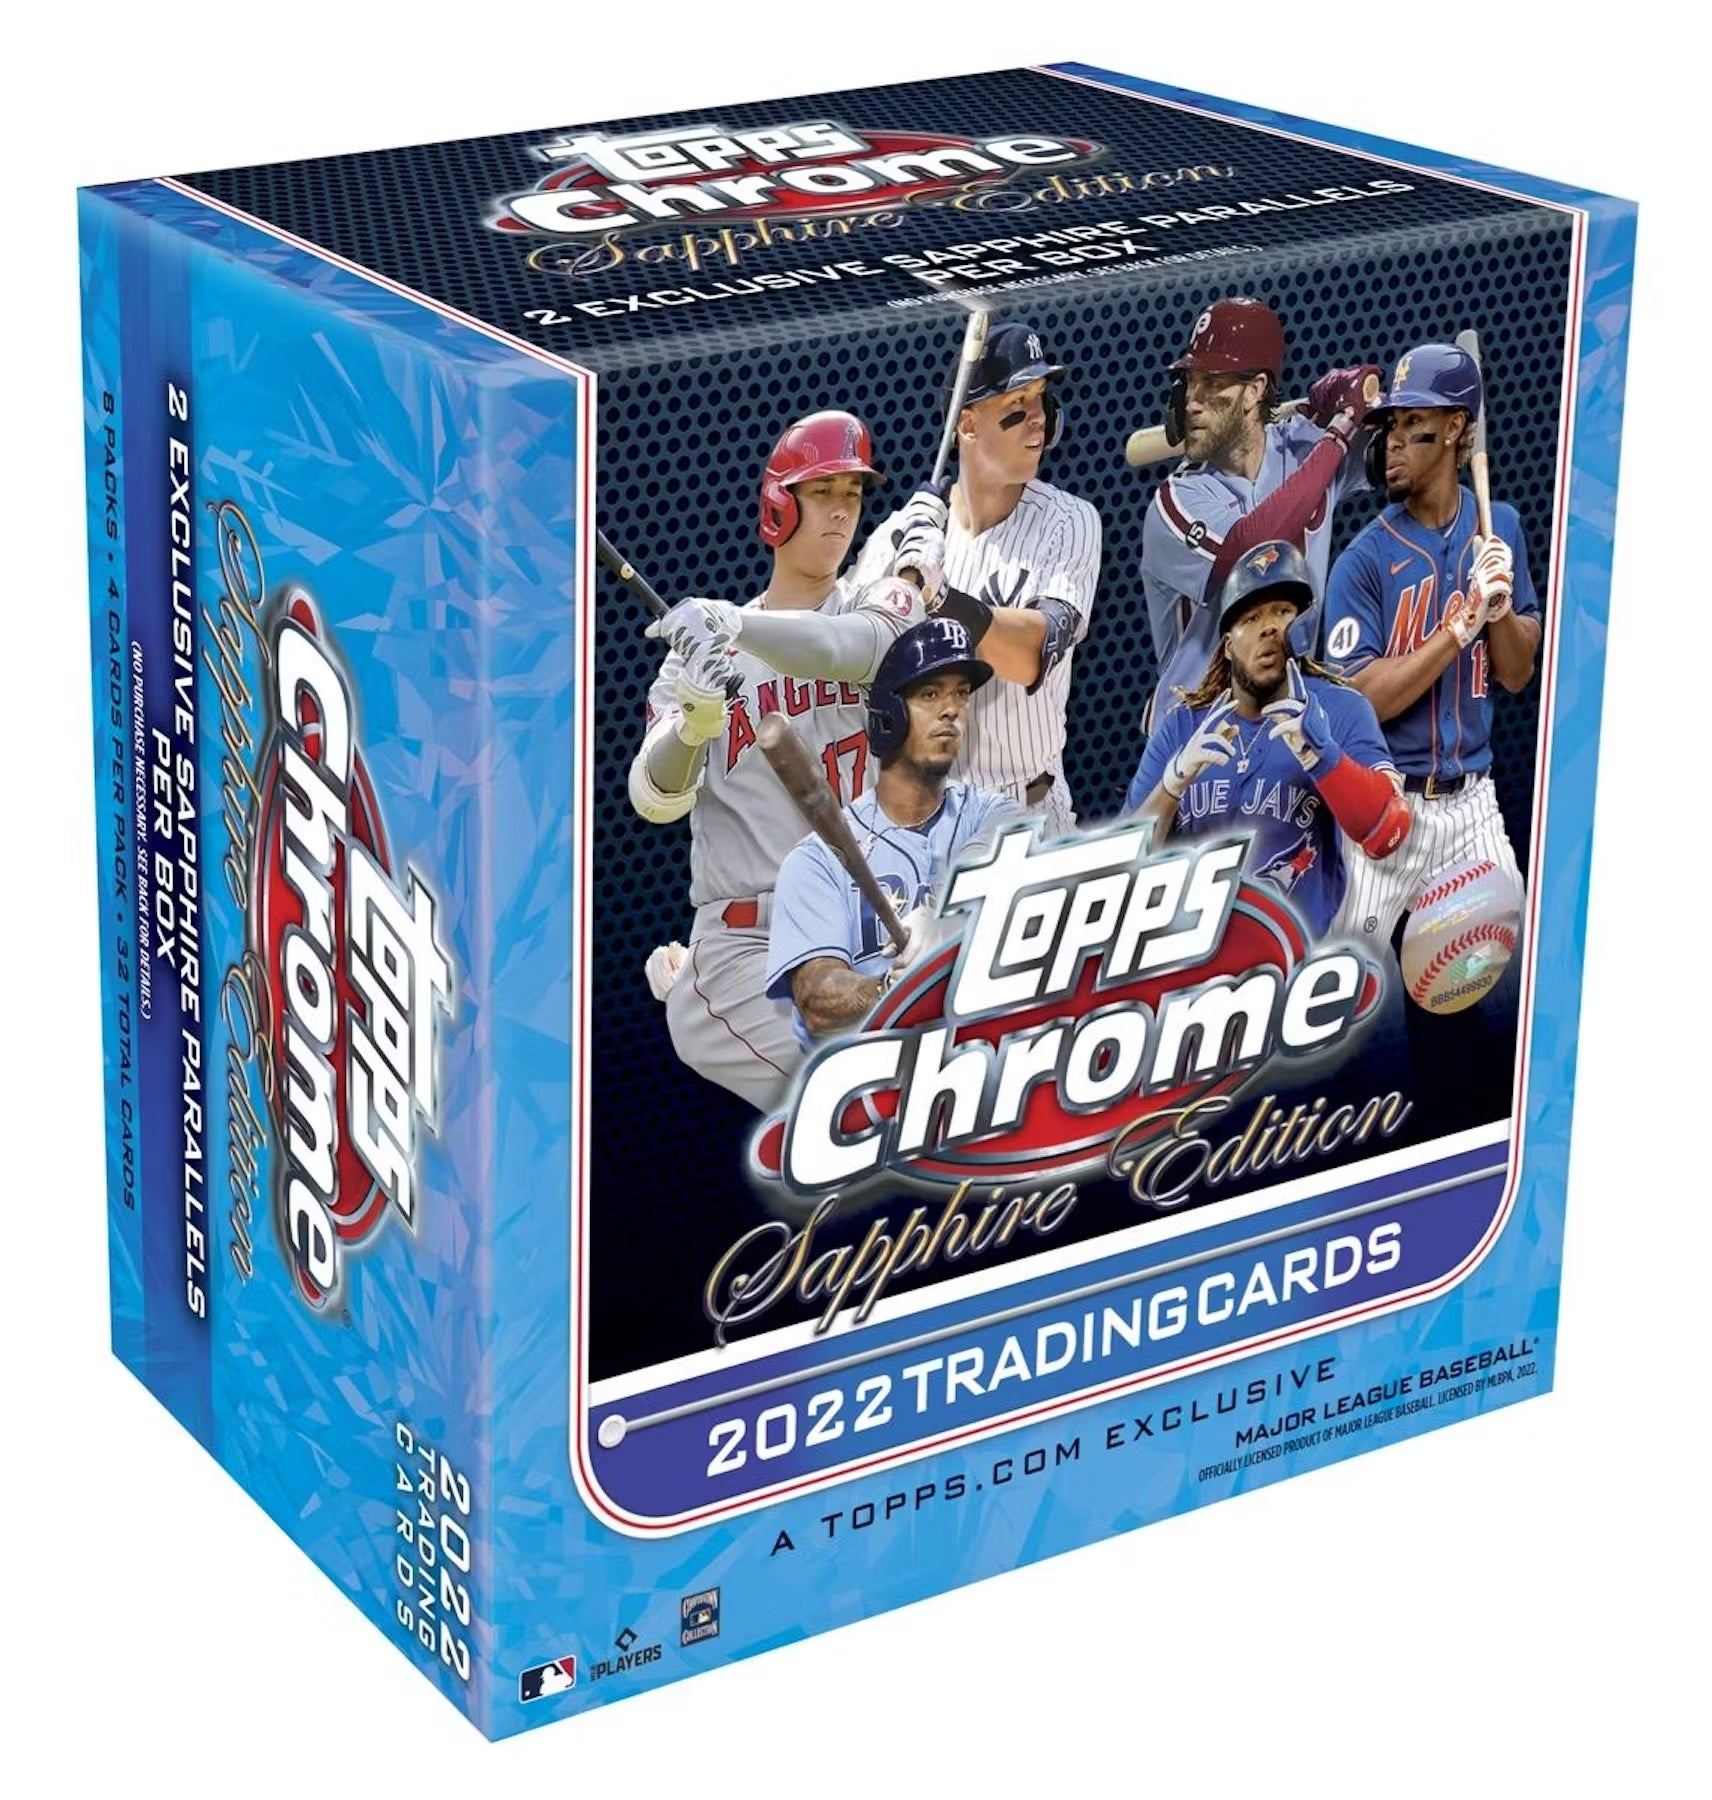 2023 Topps Chrome Logofractor Edition Baseball Checklist, Boxes